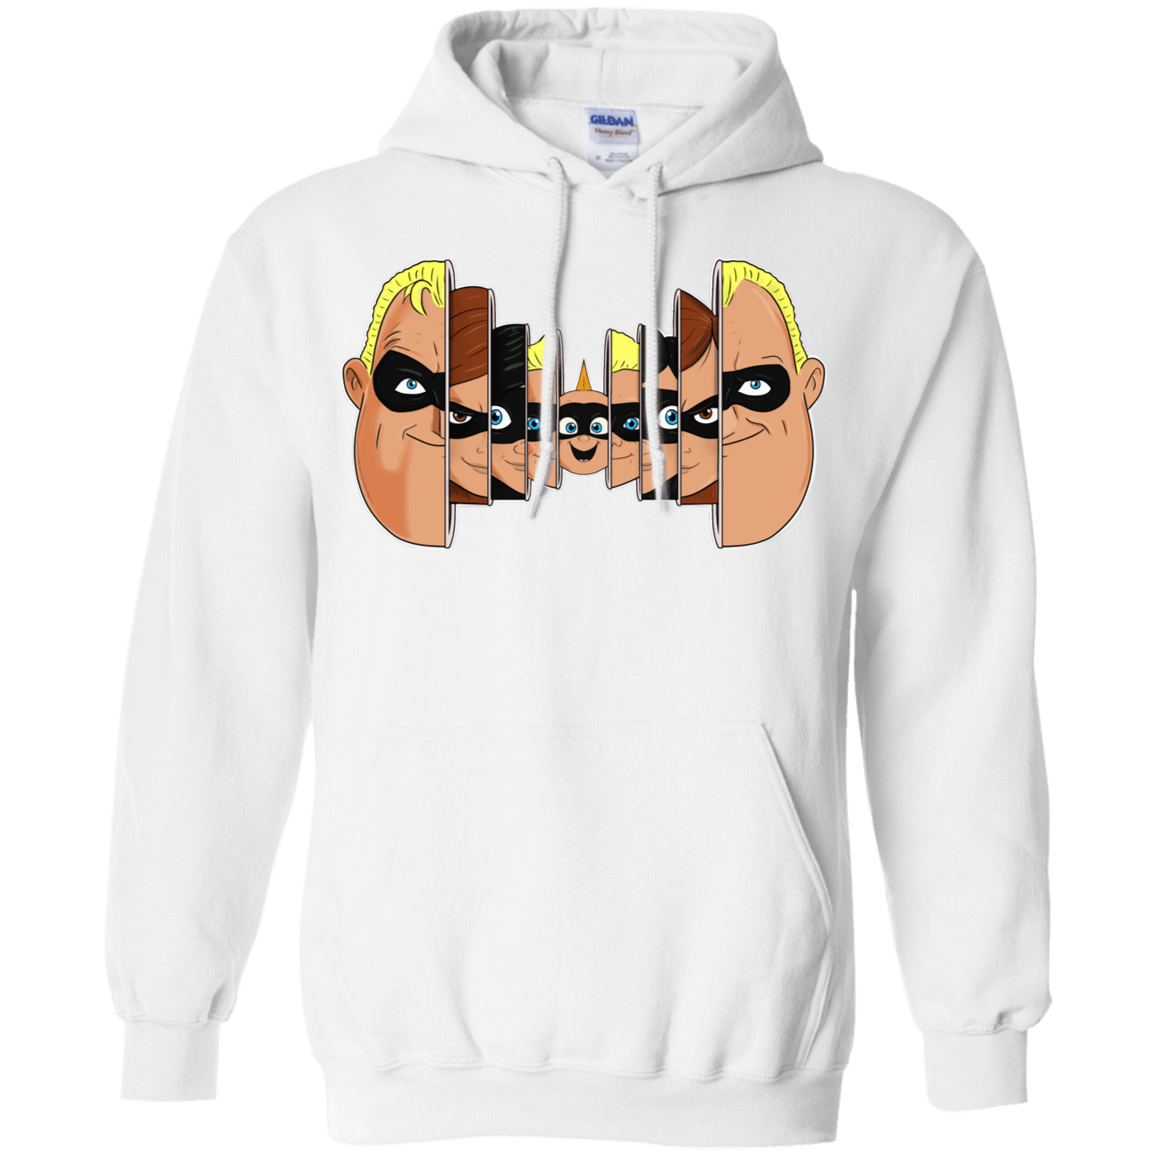 Sweatshirts White / S Incredibles Pullover Hoodie